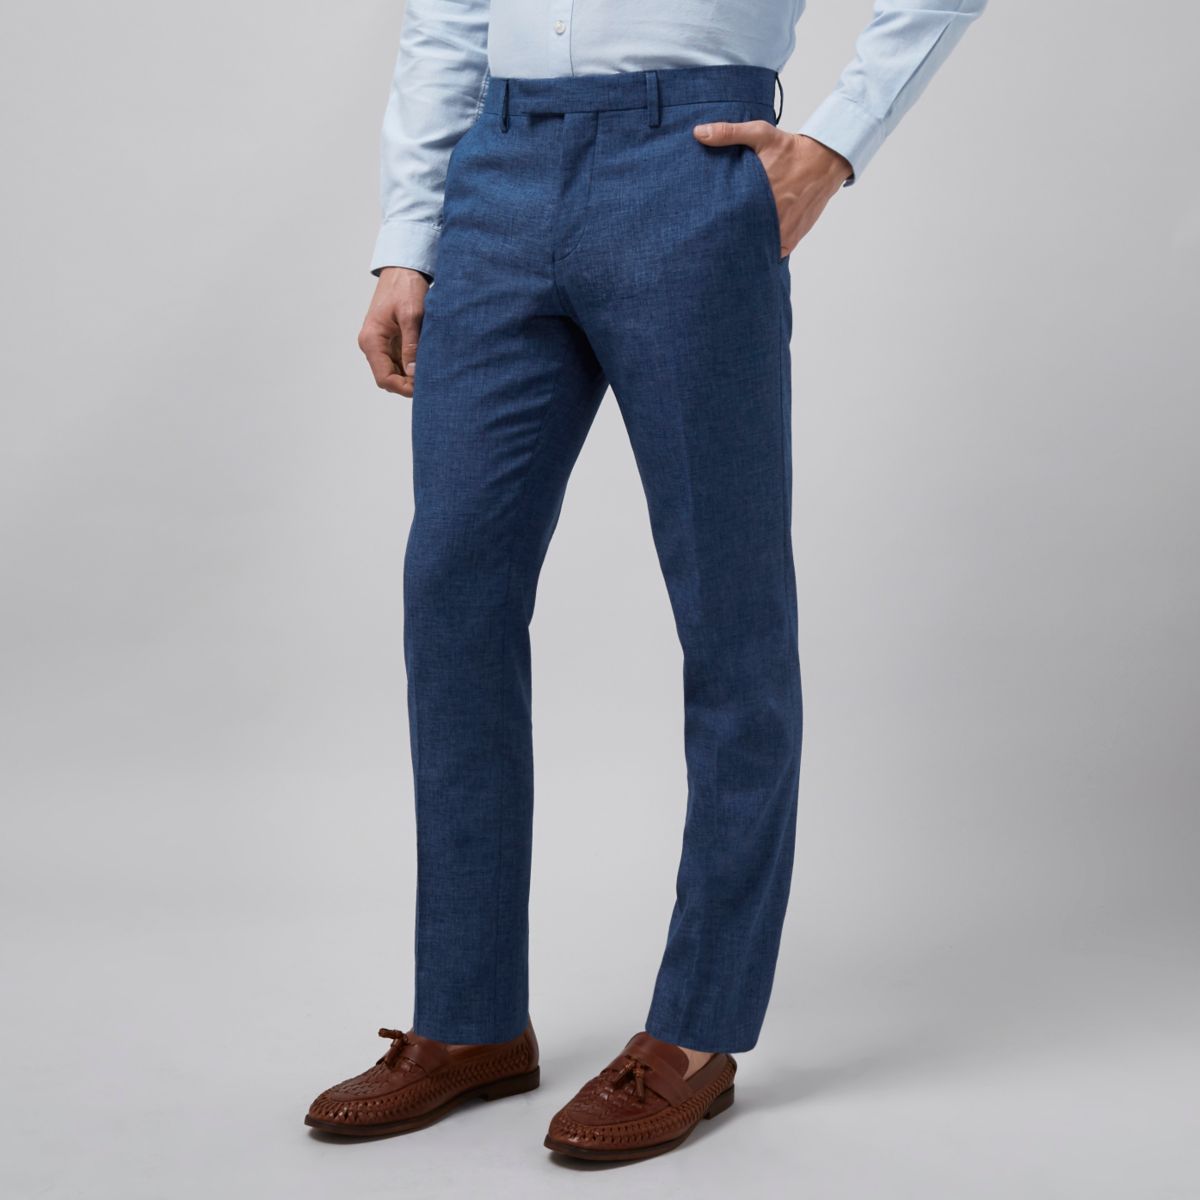 Blue linen slim fit suit jacket - Seasonal Offers - Sale - men